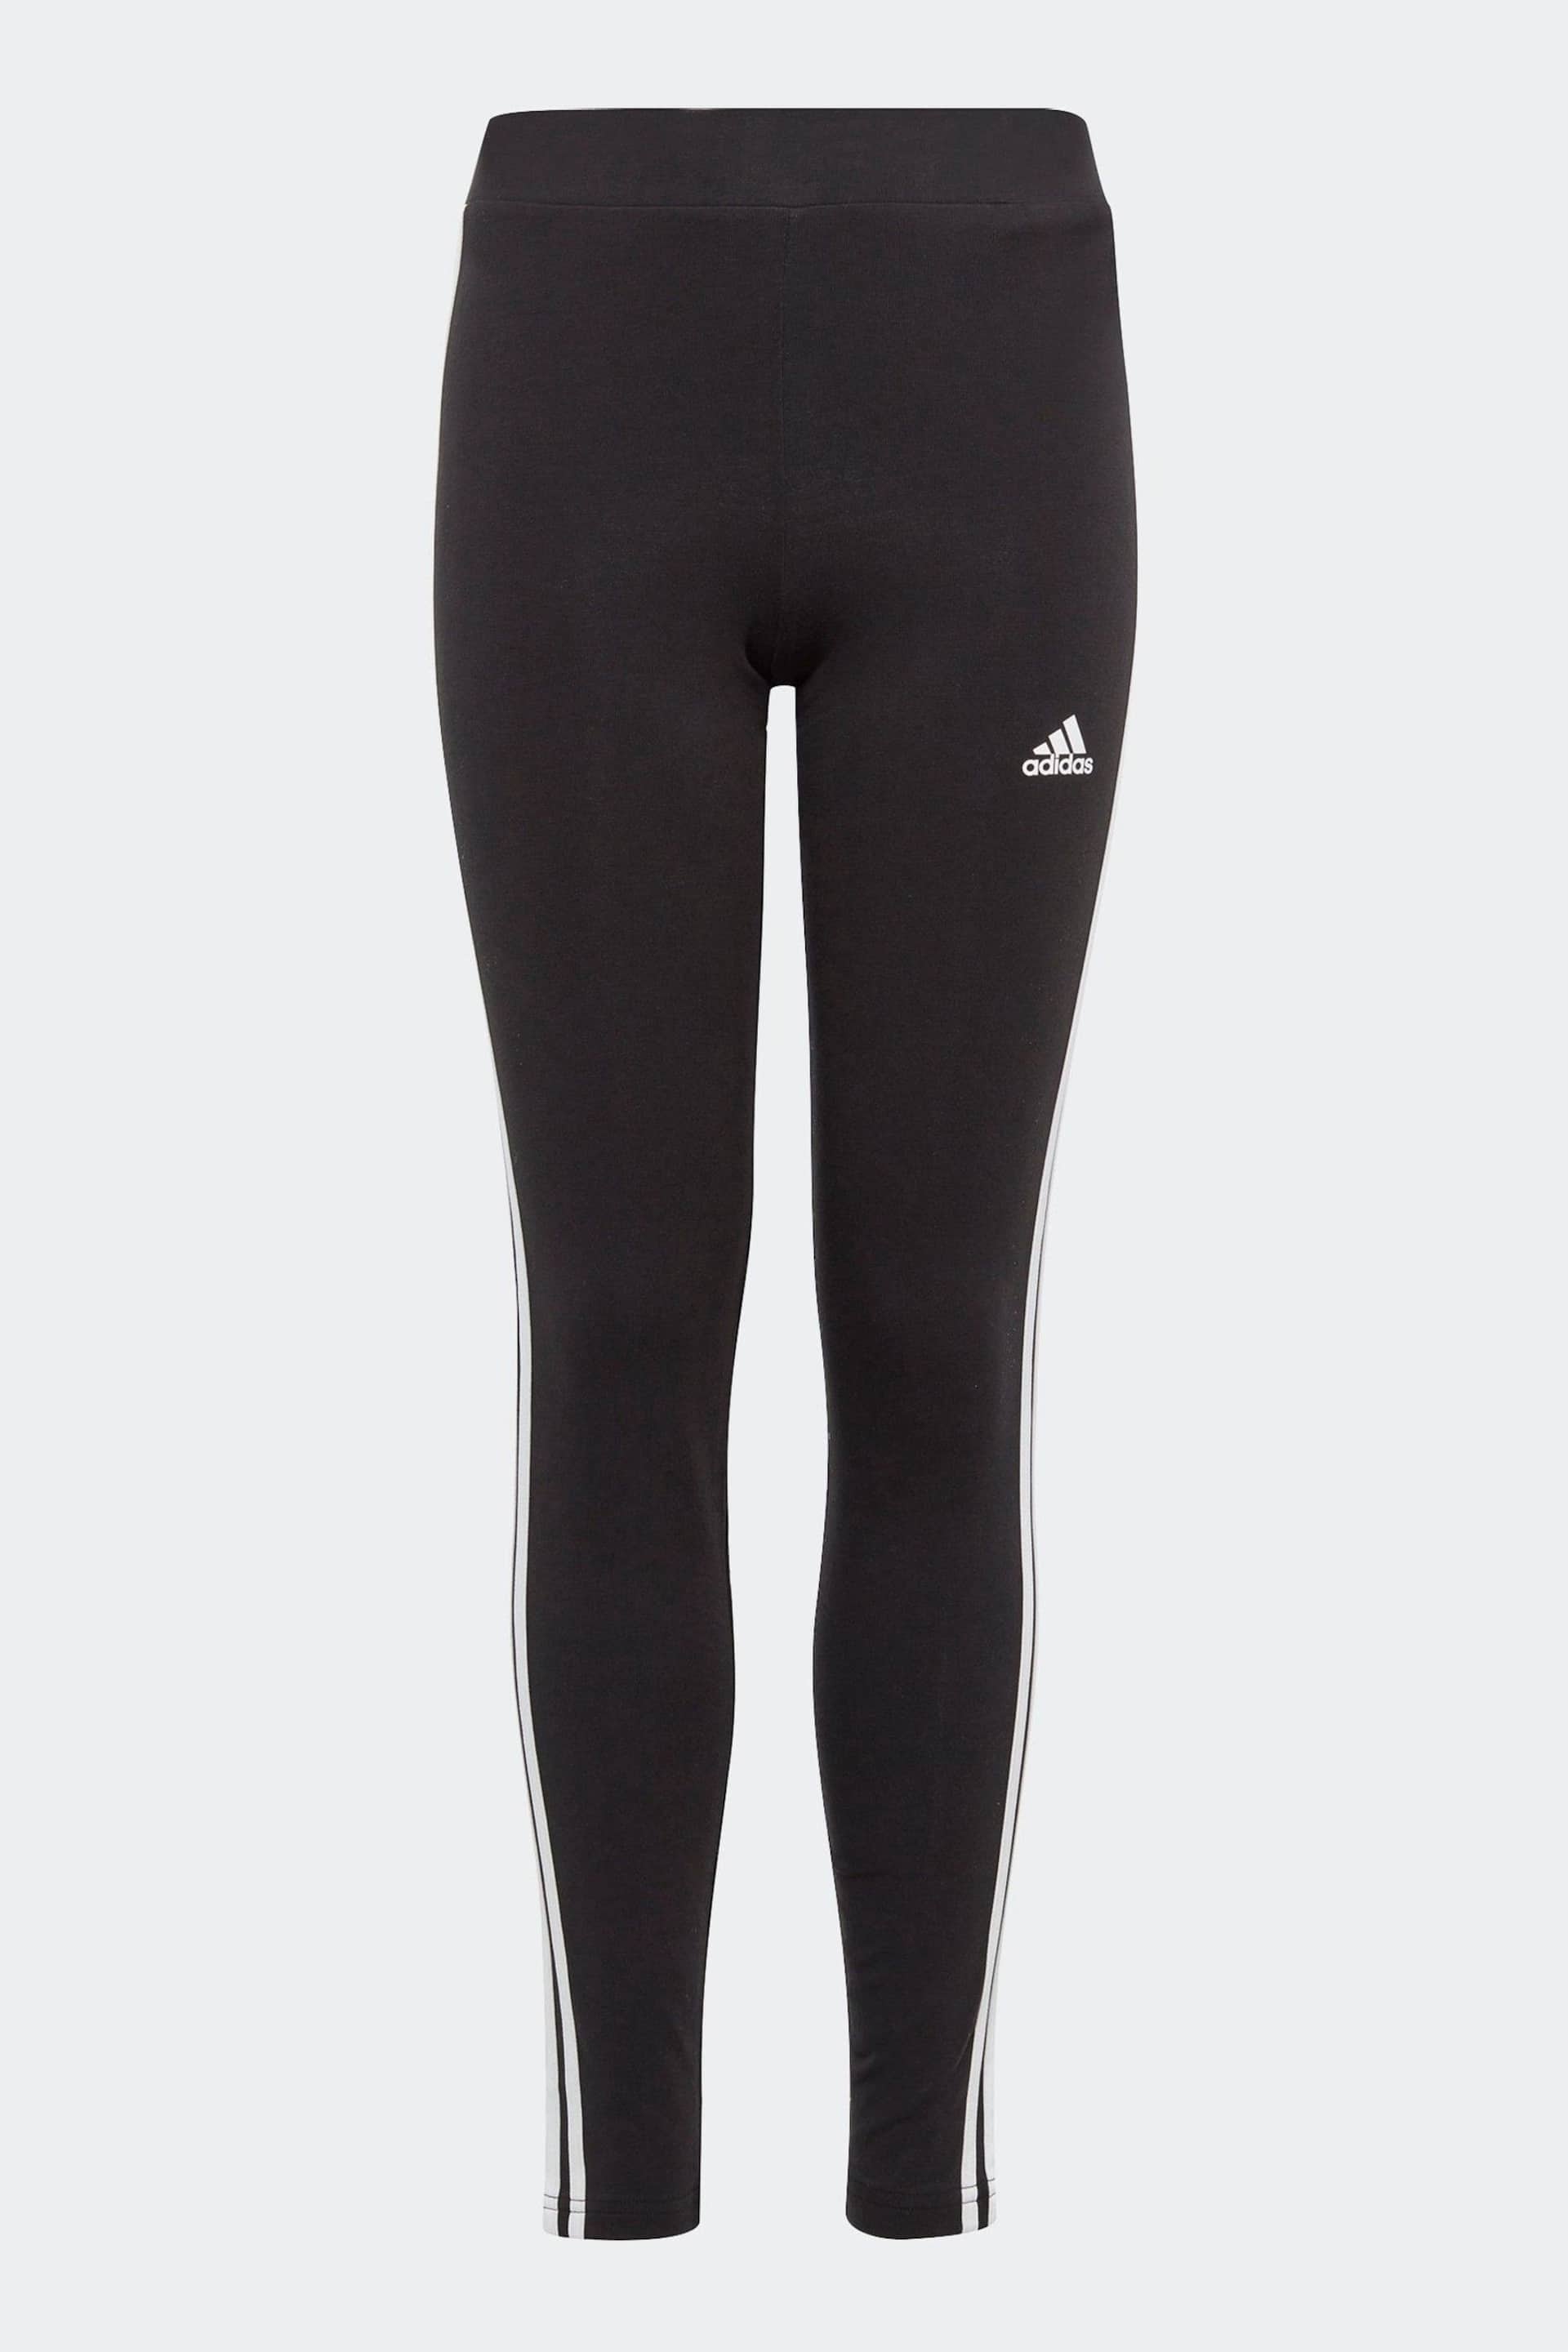 adidas Dark Black Sportswear Essentials 3-Stripes Cotton Leggings - Image 1 of 5